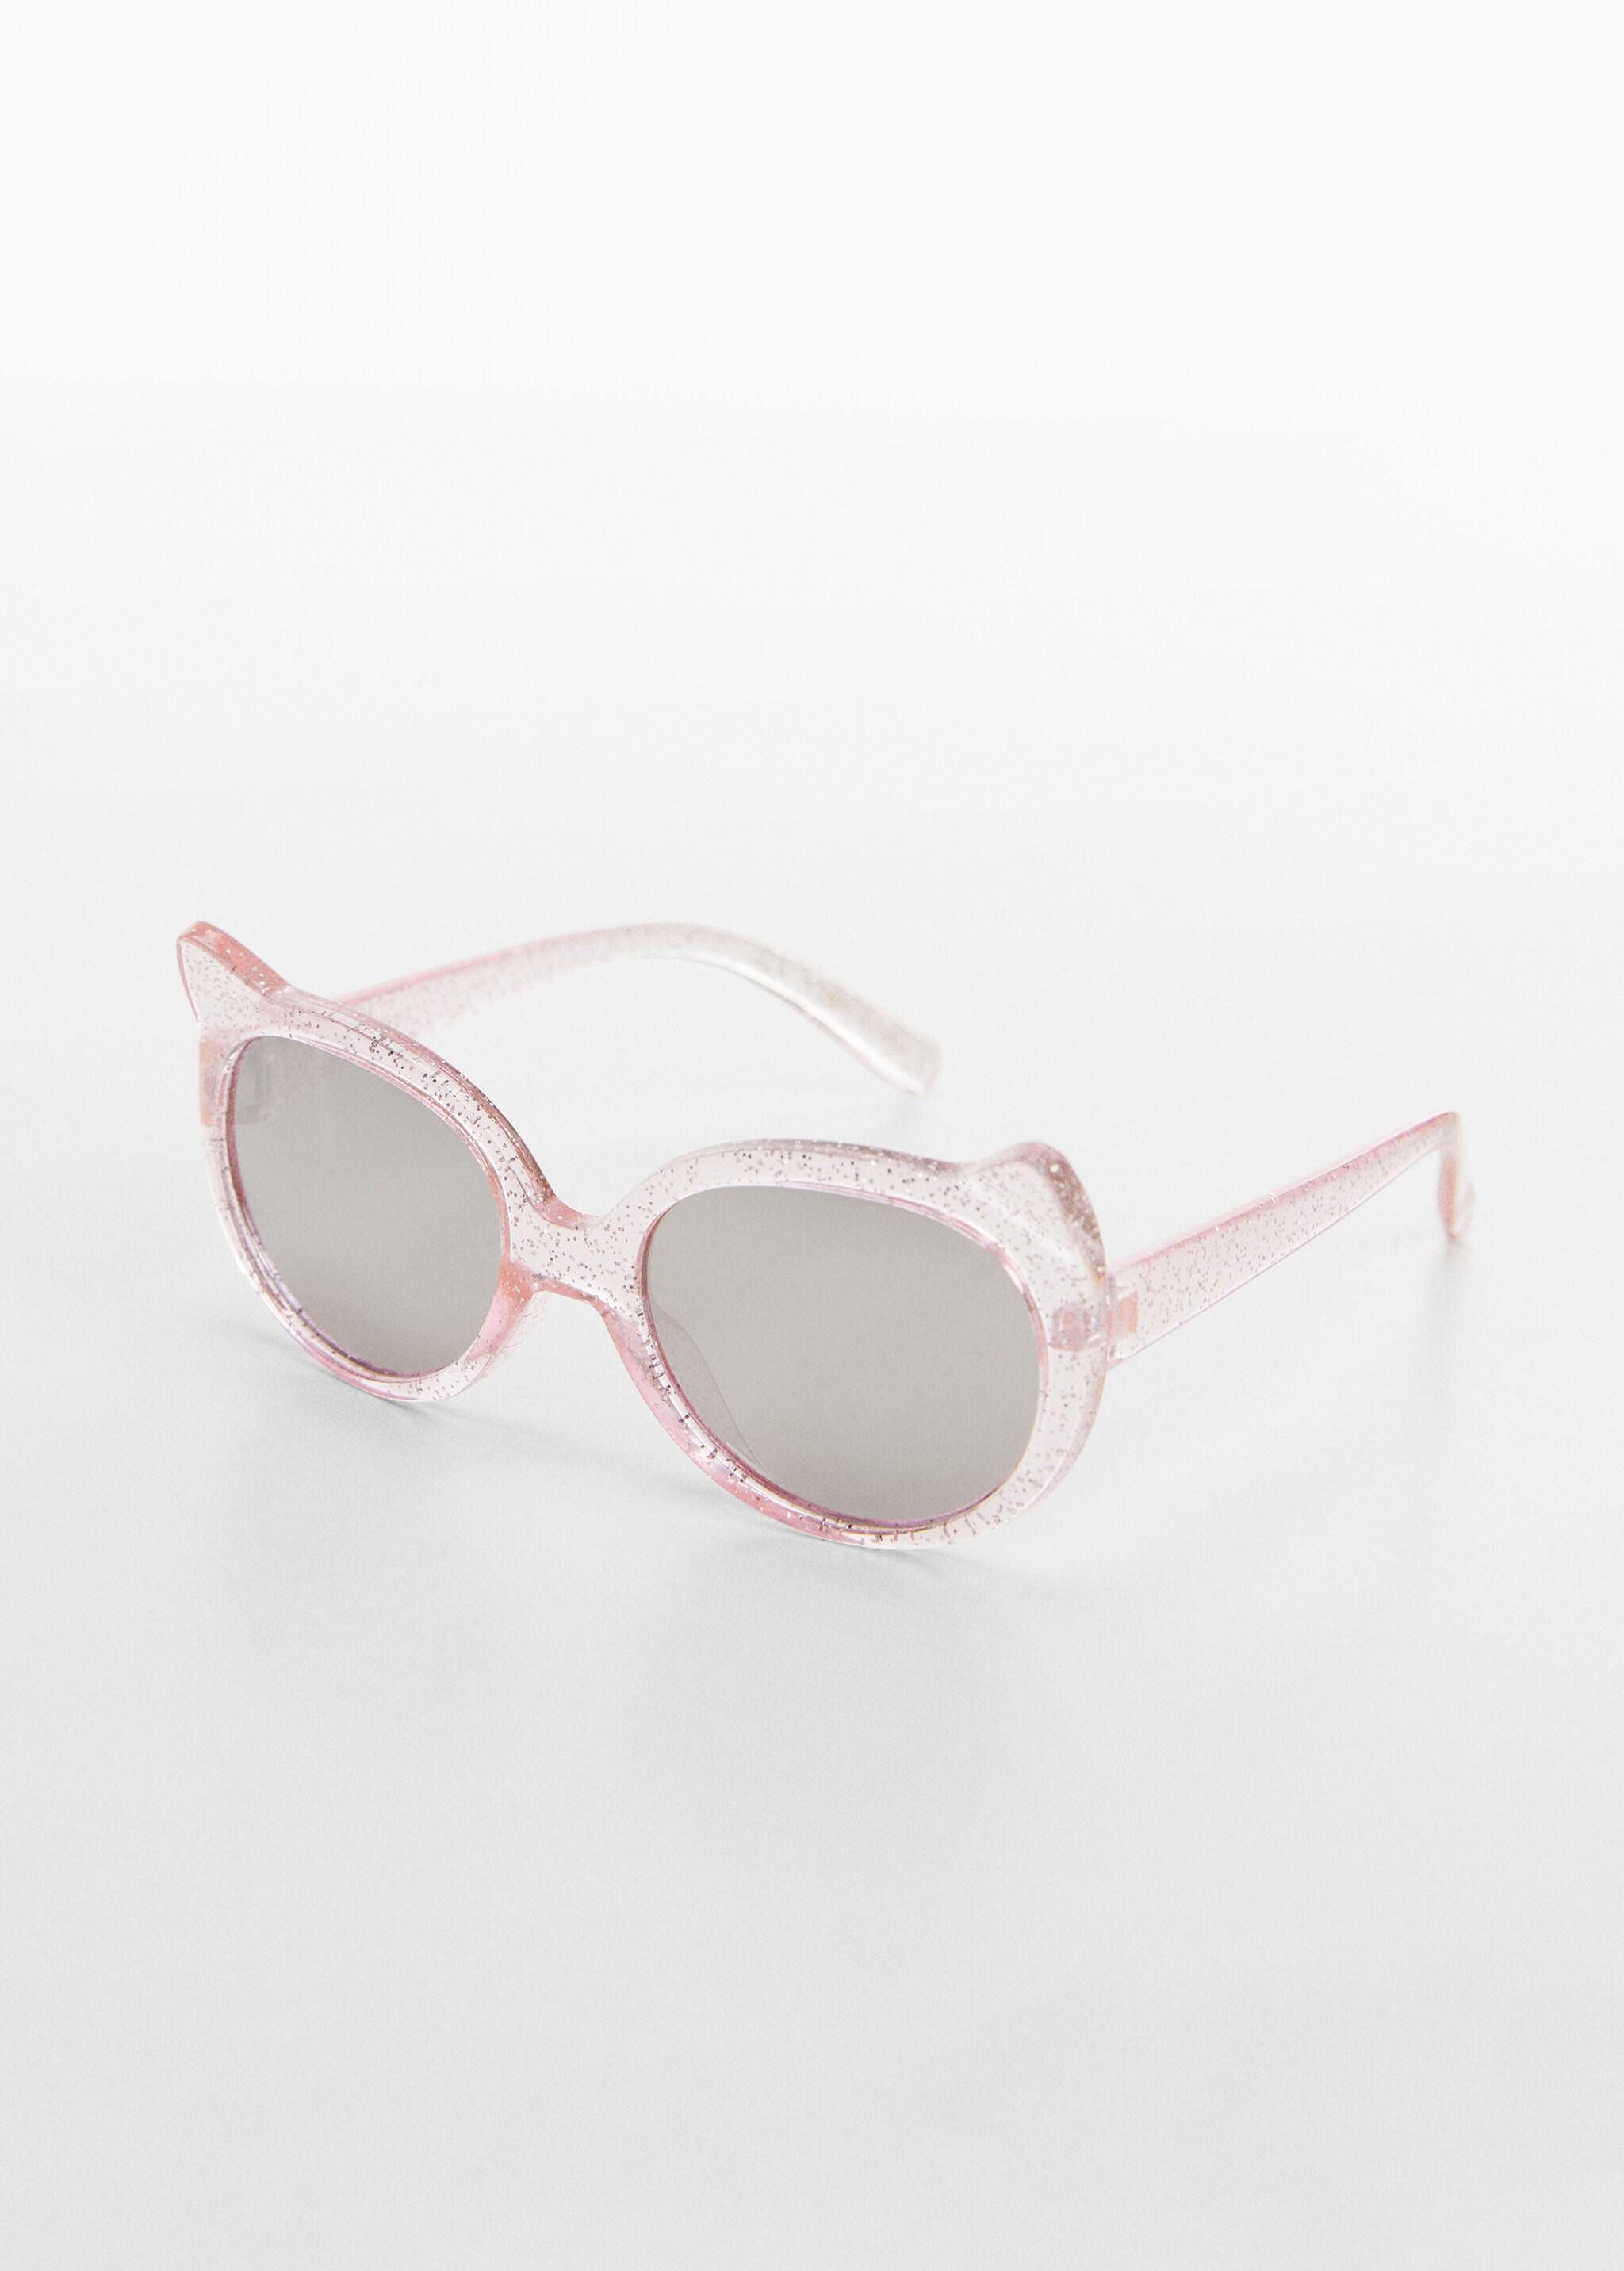 Cat-eye sunglasses - Medium plane